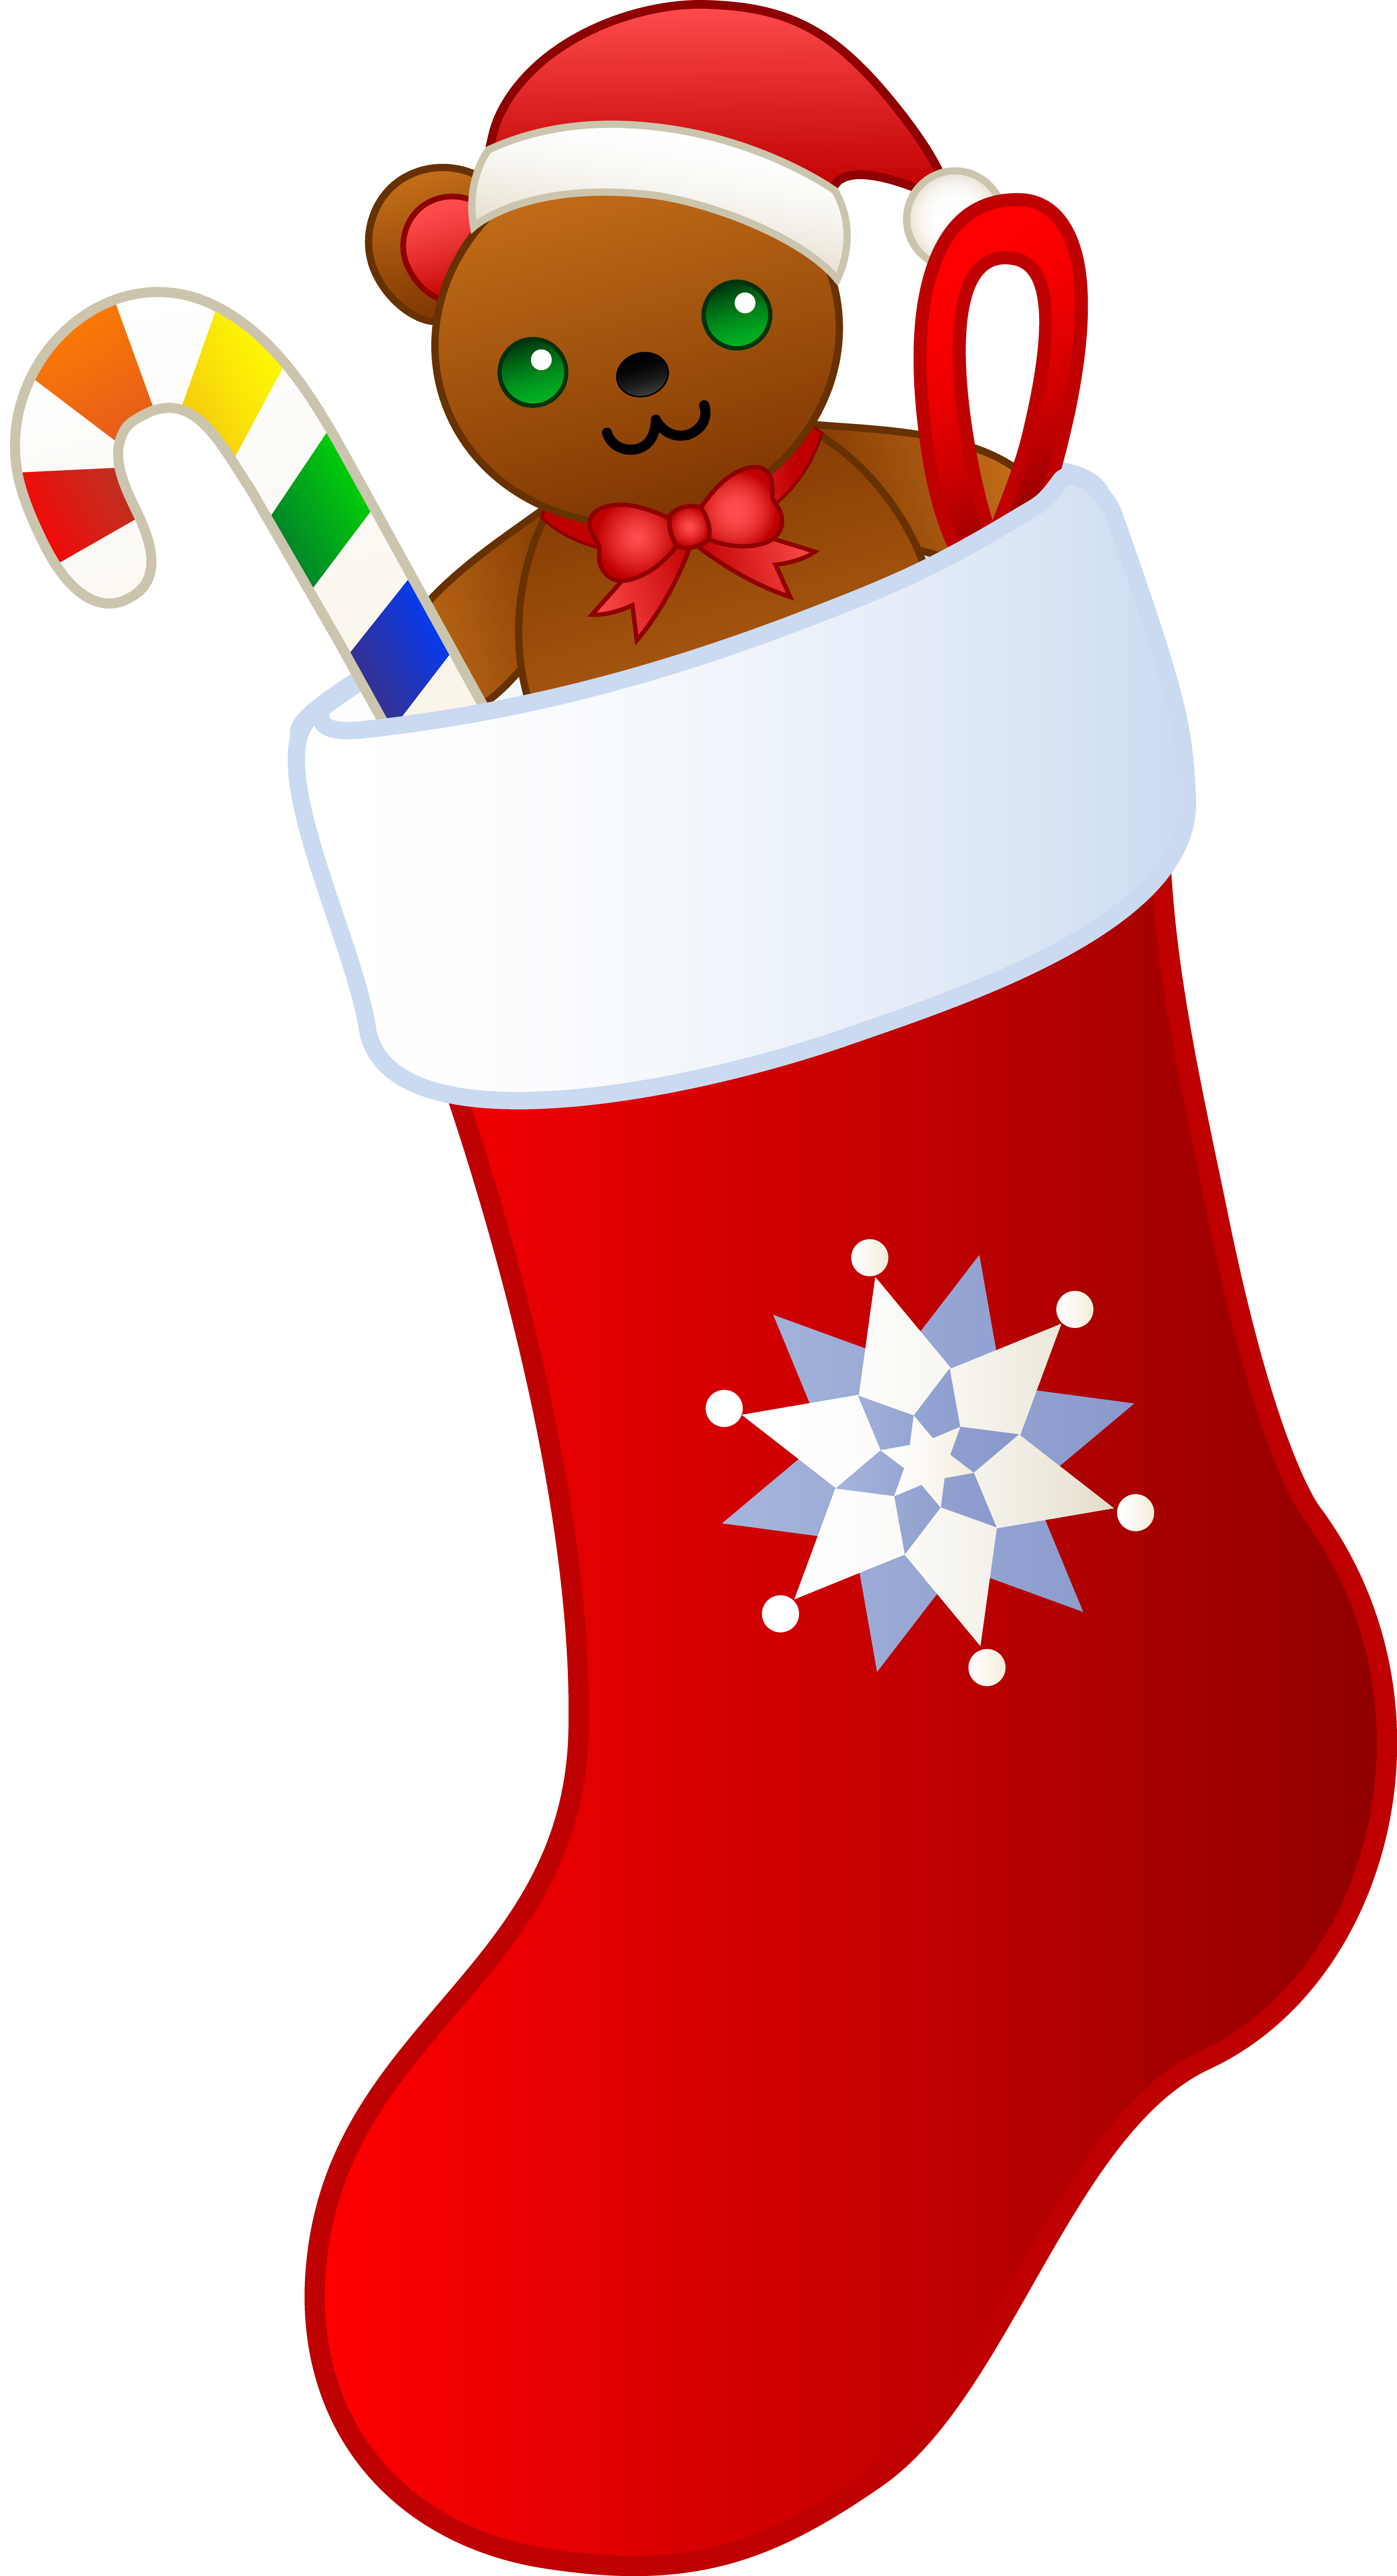 Christmas stocking cartoon clipart